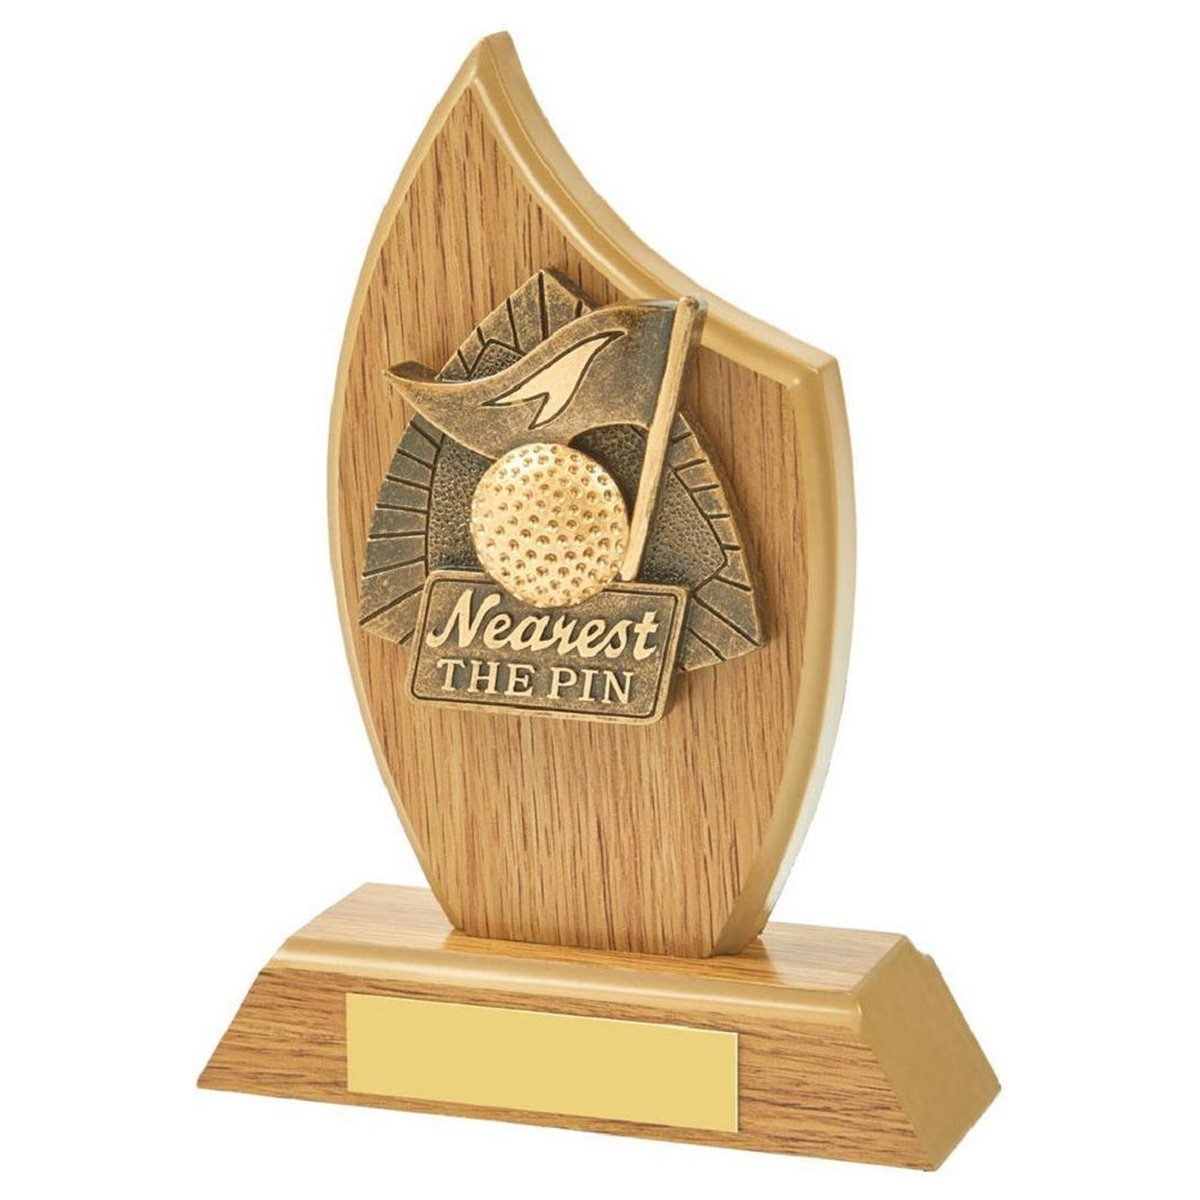 Nearest The Pin Wood Stand Award 1122